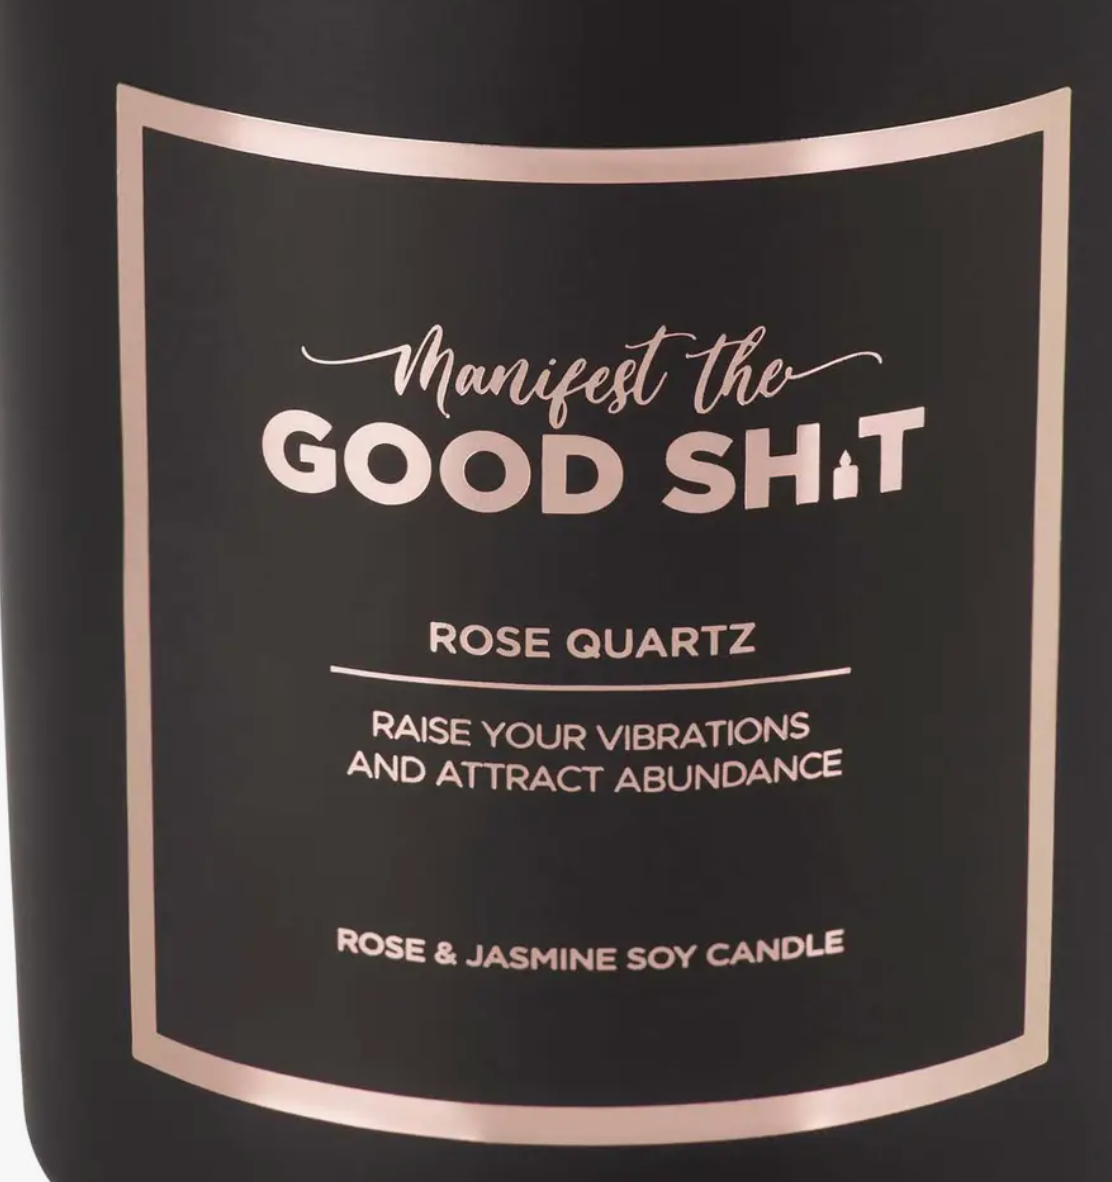 Manifest the Good Sh!t - Rose Quartz Crystal Candle